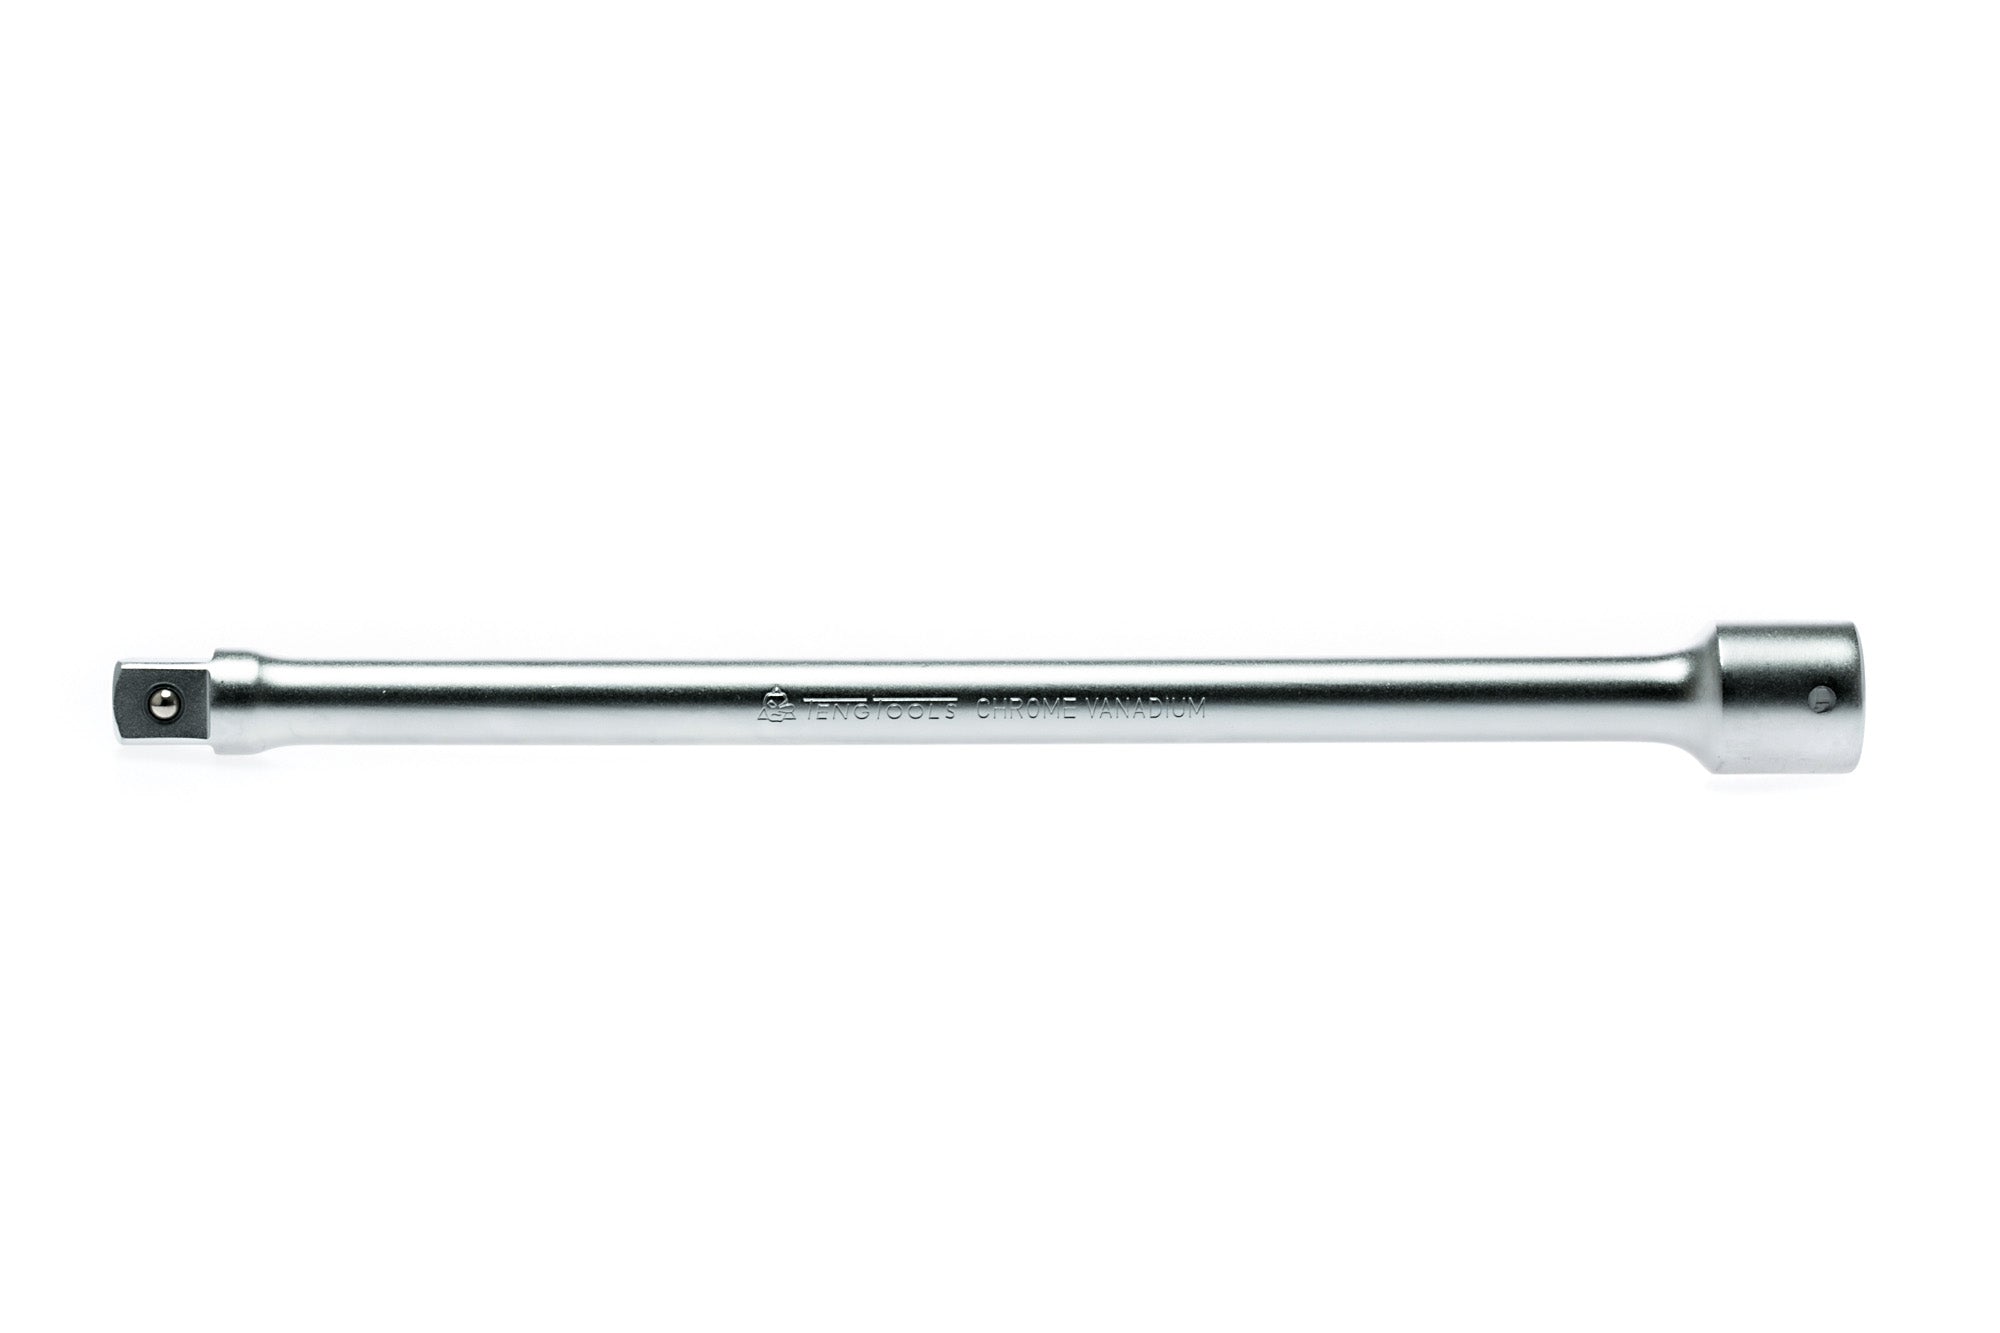 3/4 Inch Drive Extension Bars Made Of Chrome Vanadium Steel - 16